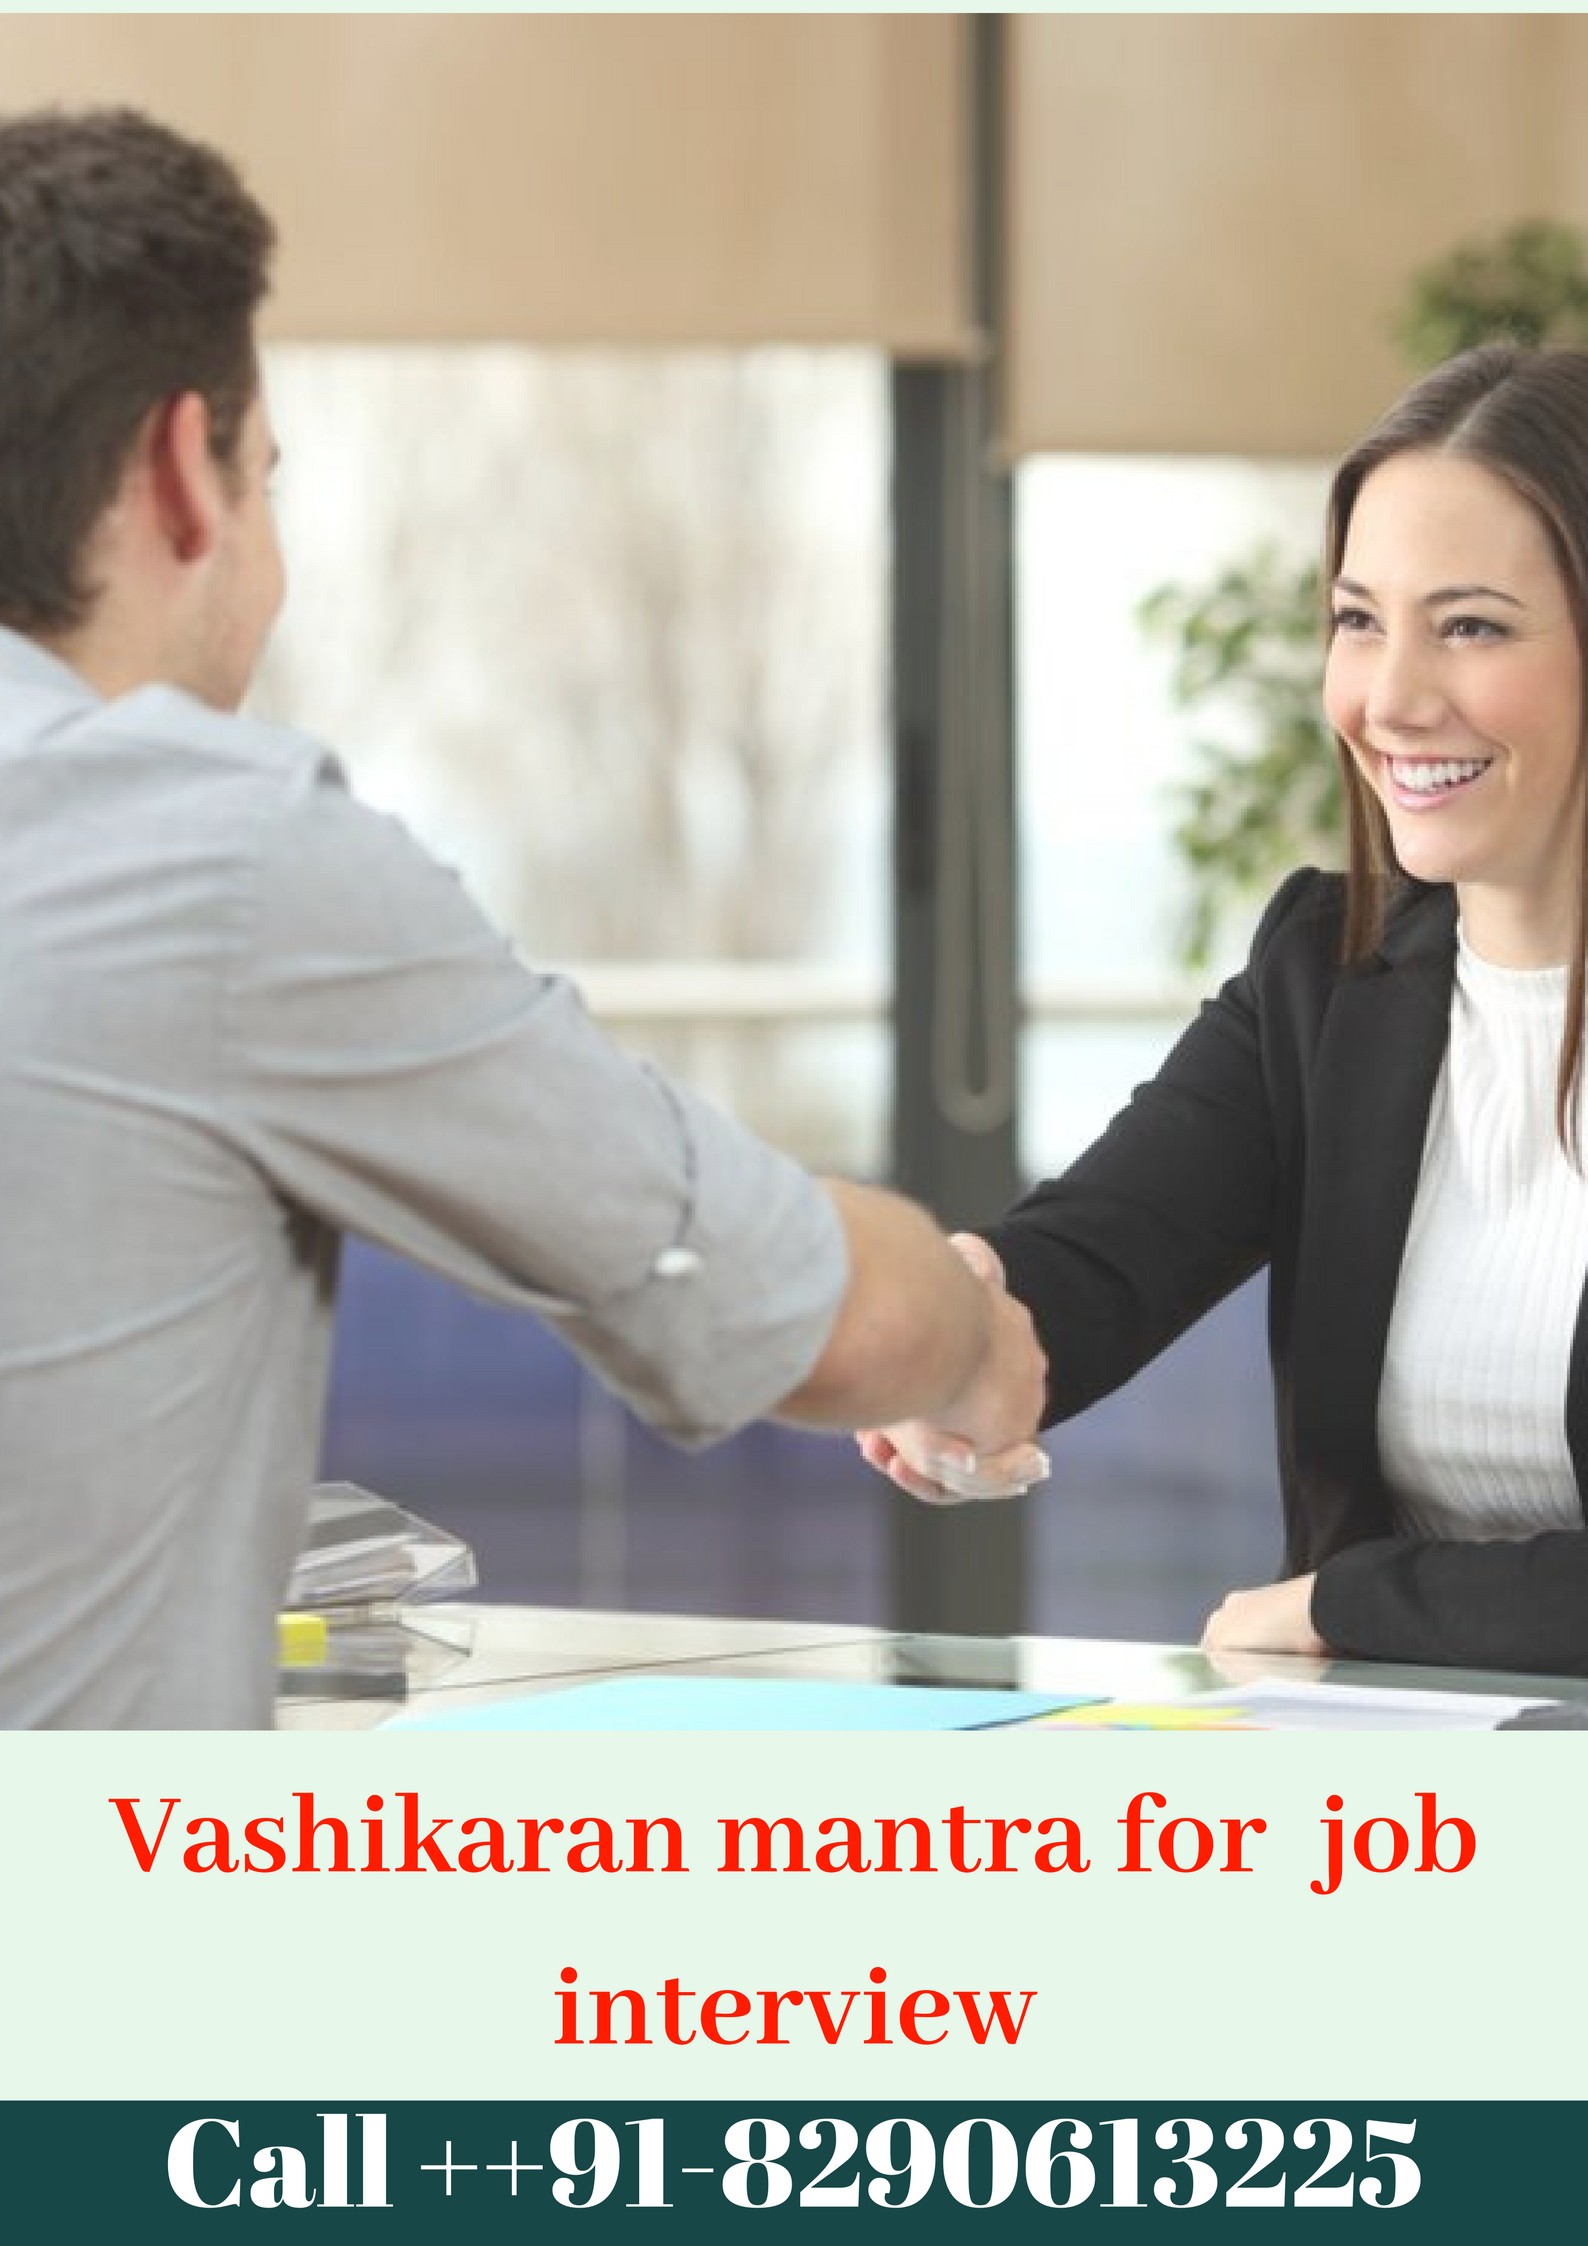 Vashikaran mantra for success in job interview